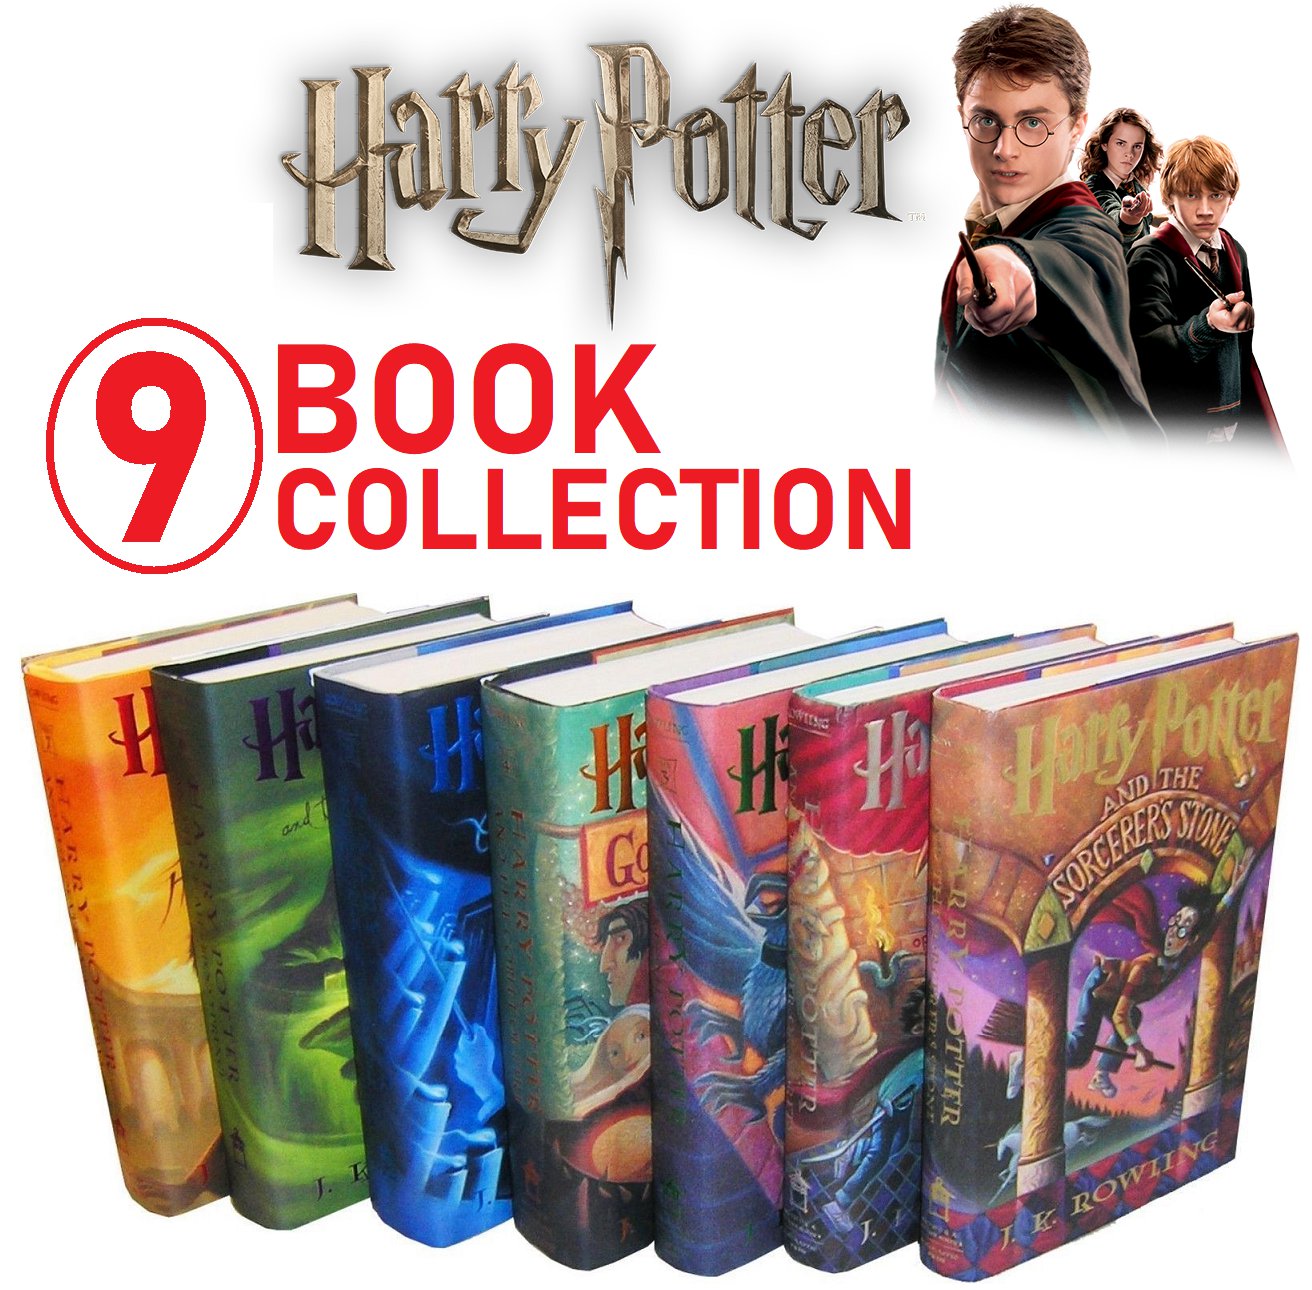 Harry potter book 7 pdf file